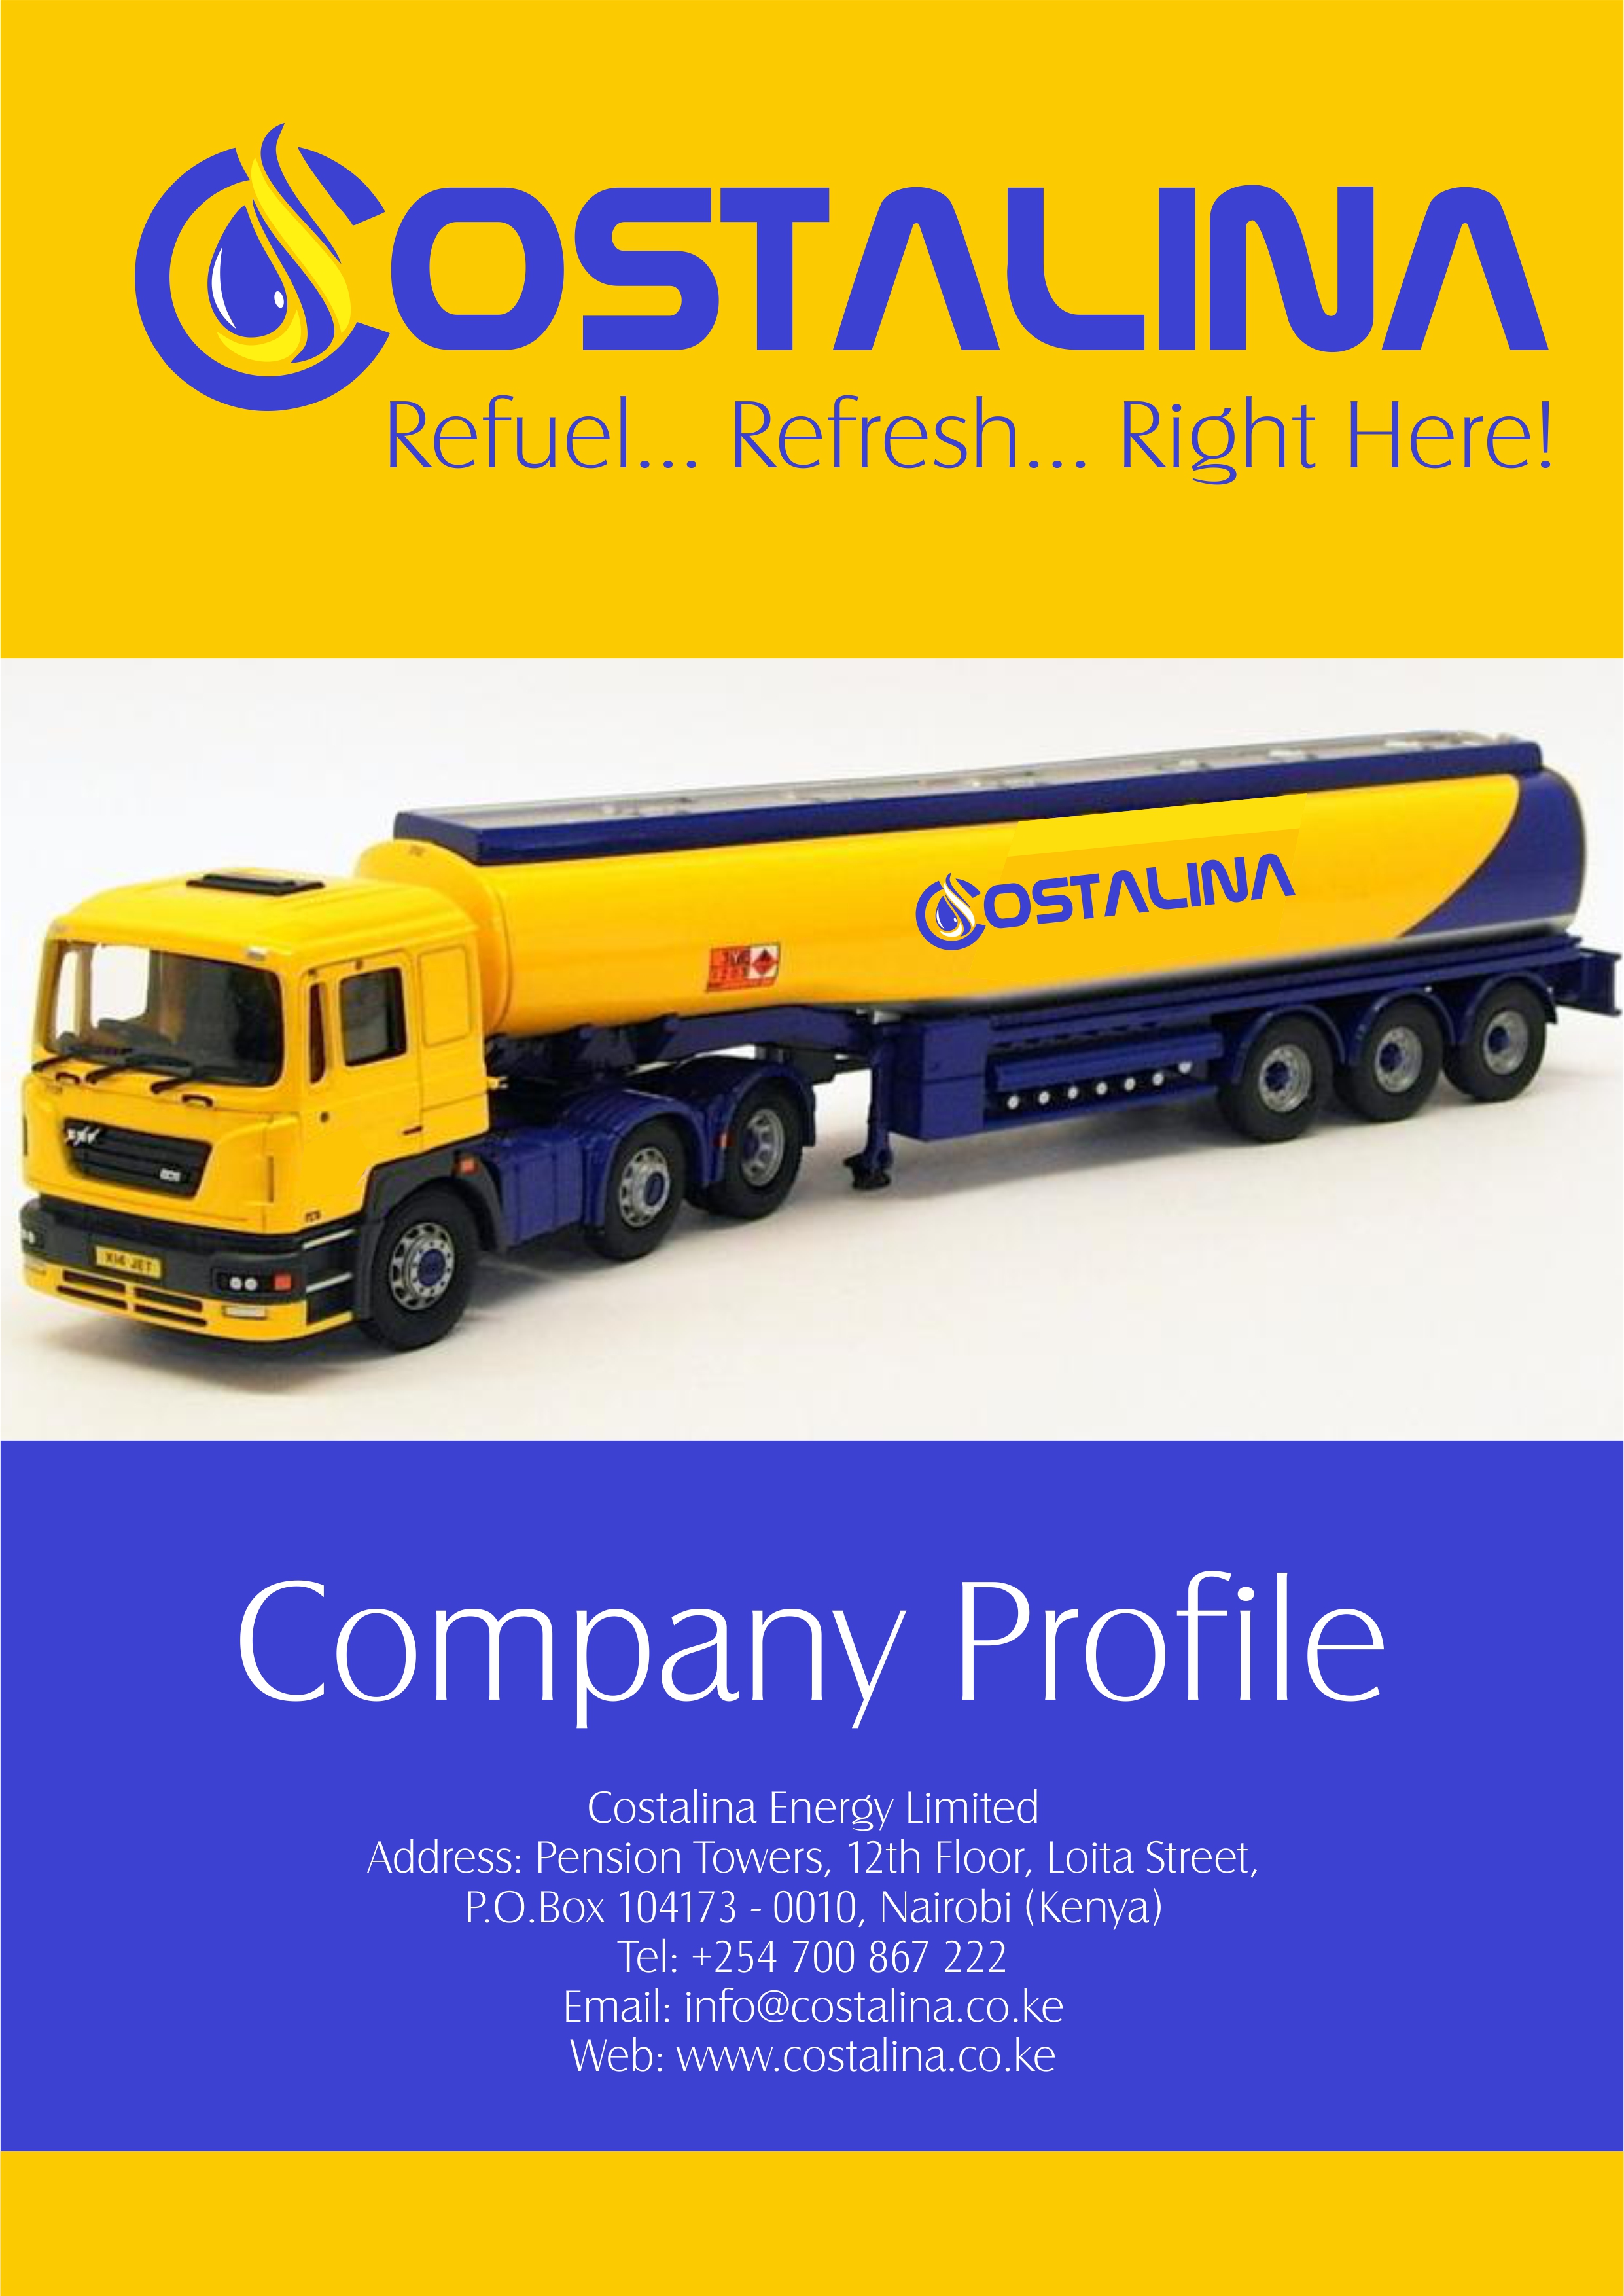 Cosstalina Energy Limited